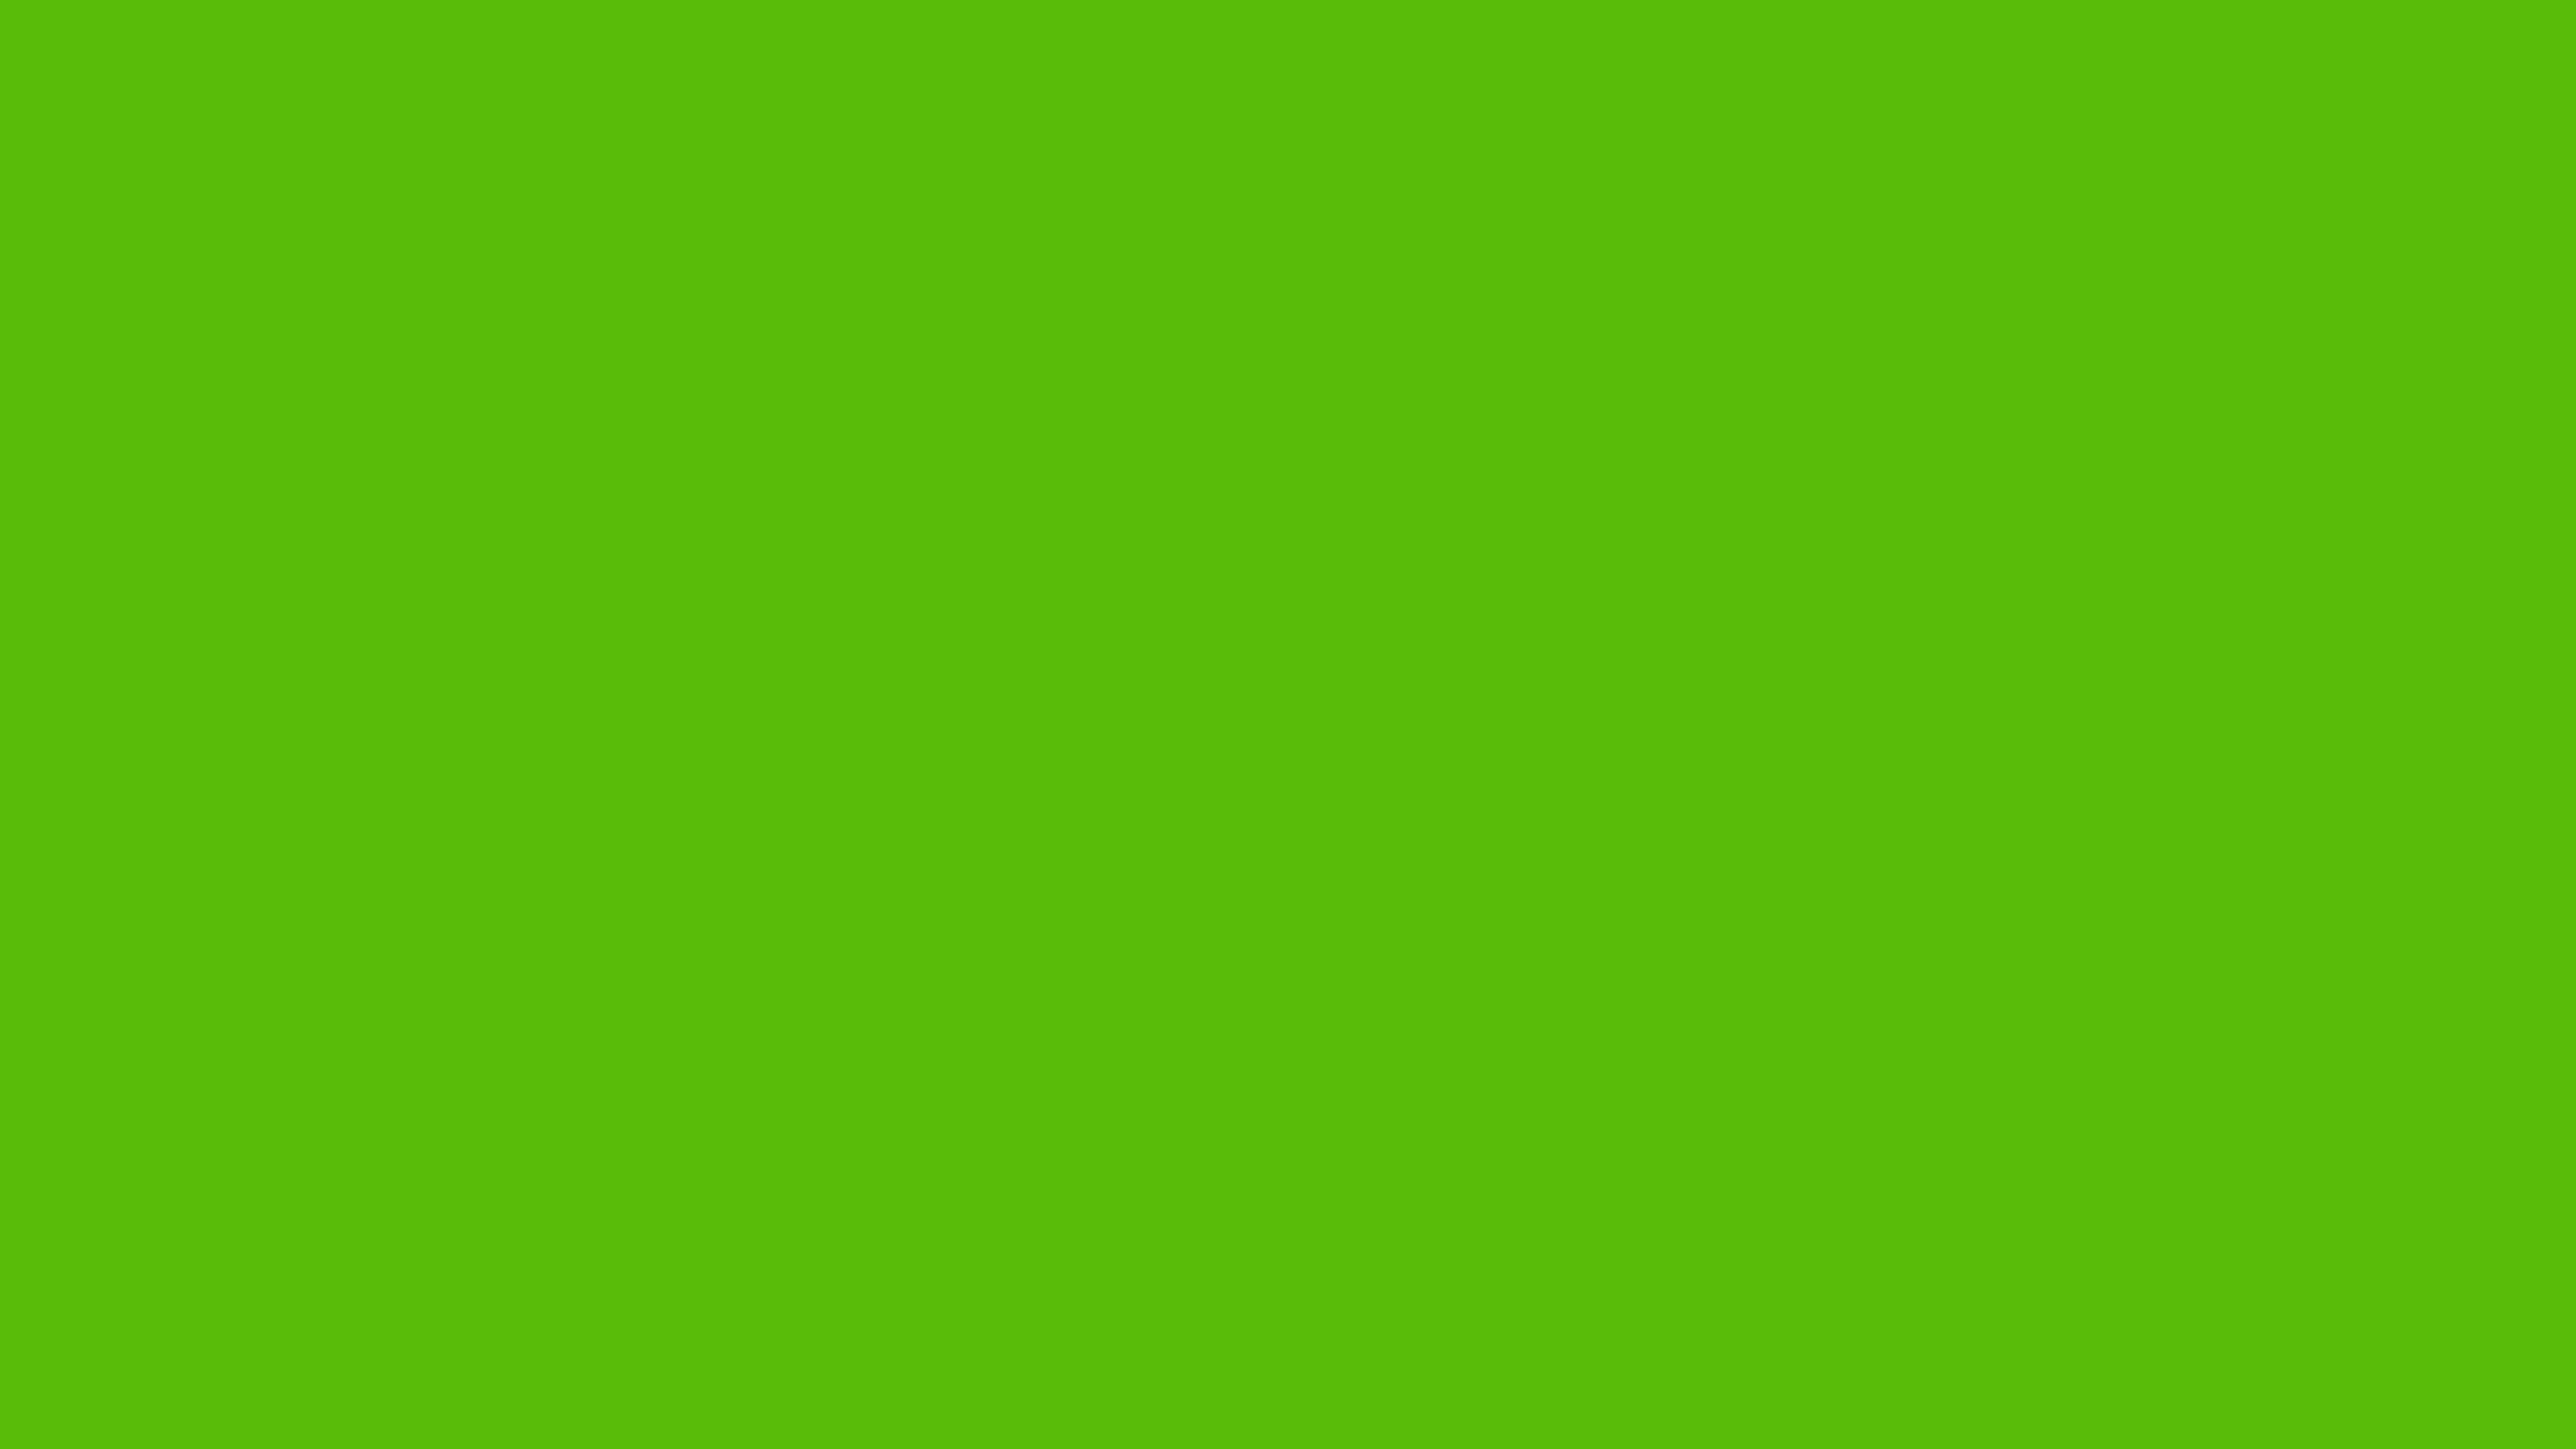 Frog Green Solid Color Background Image | Free Image Generator